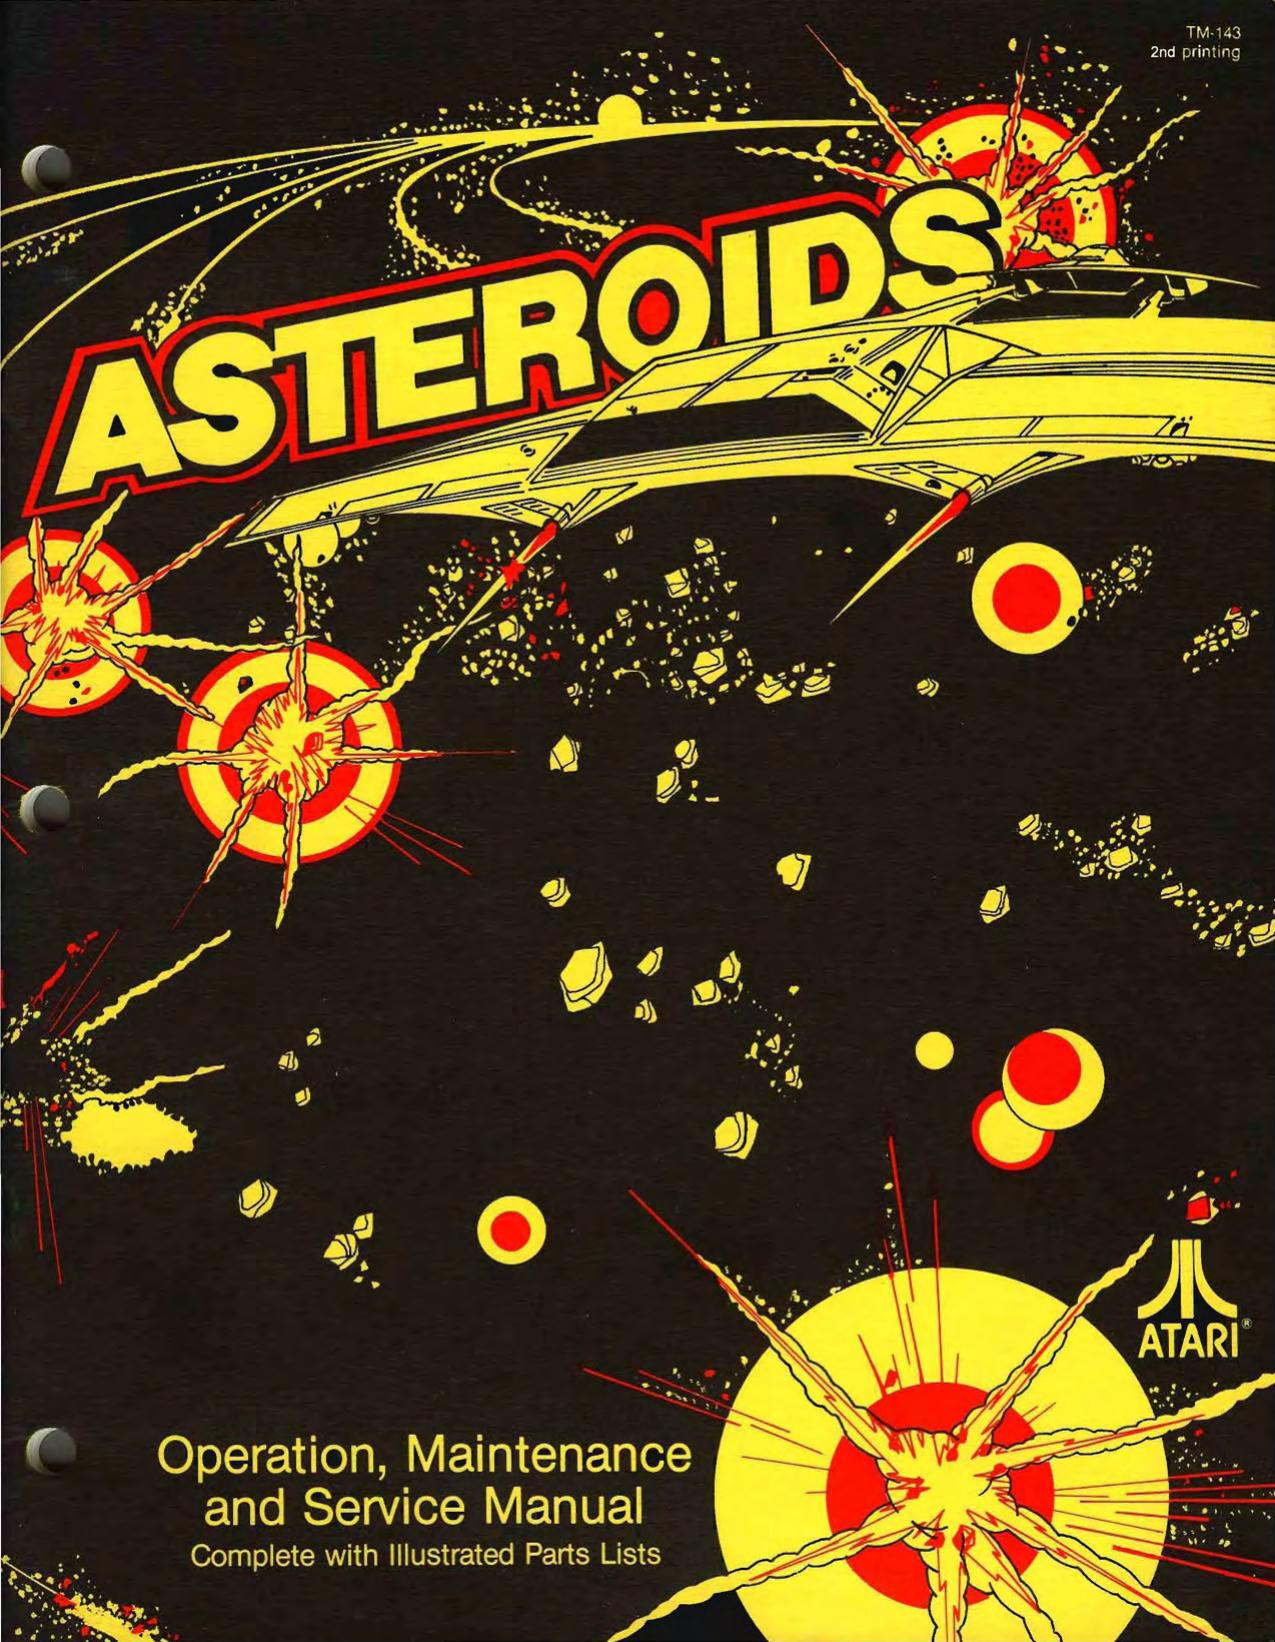 Asteroids TM-143 2nd Printing